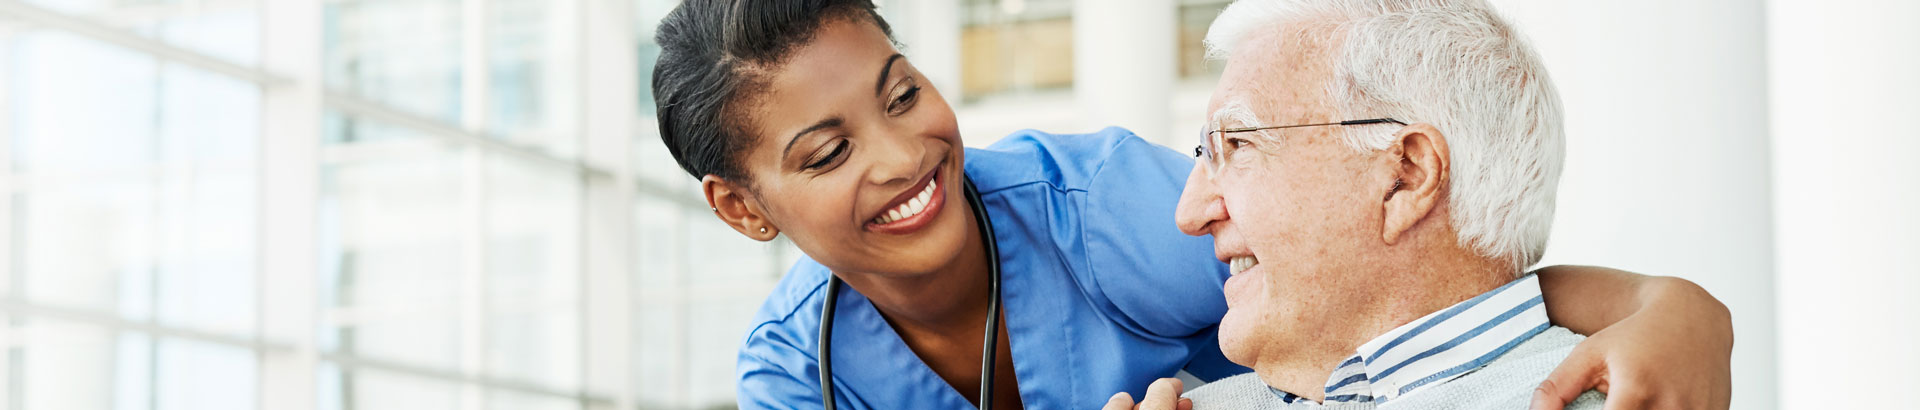 Bayhealth nurse smiling at patient